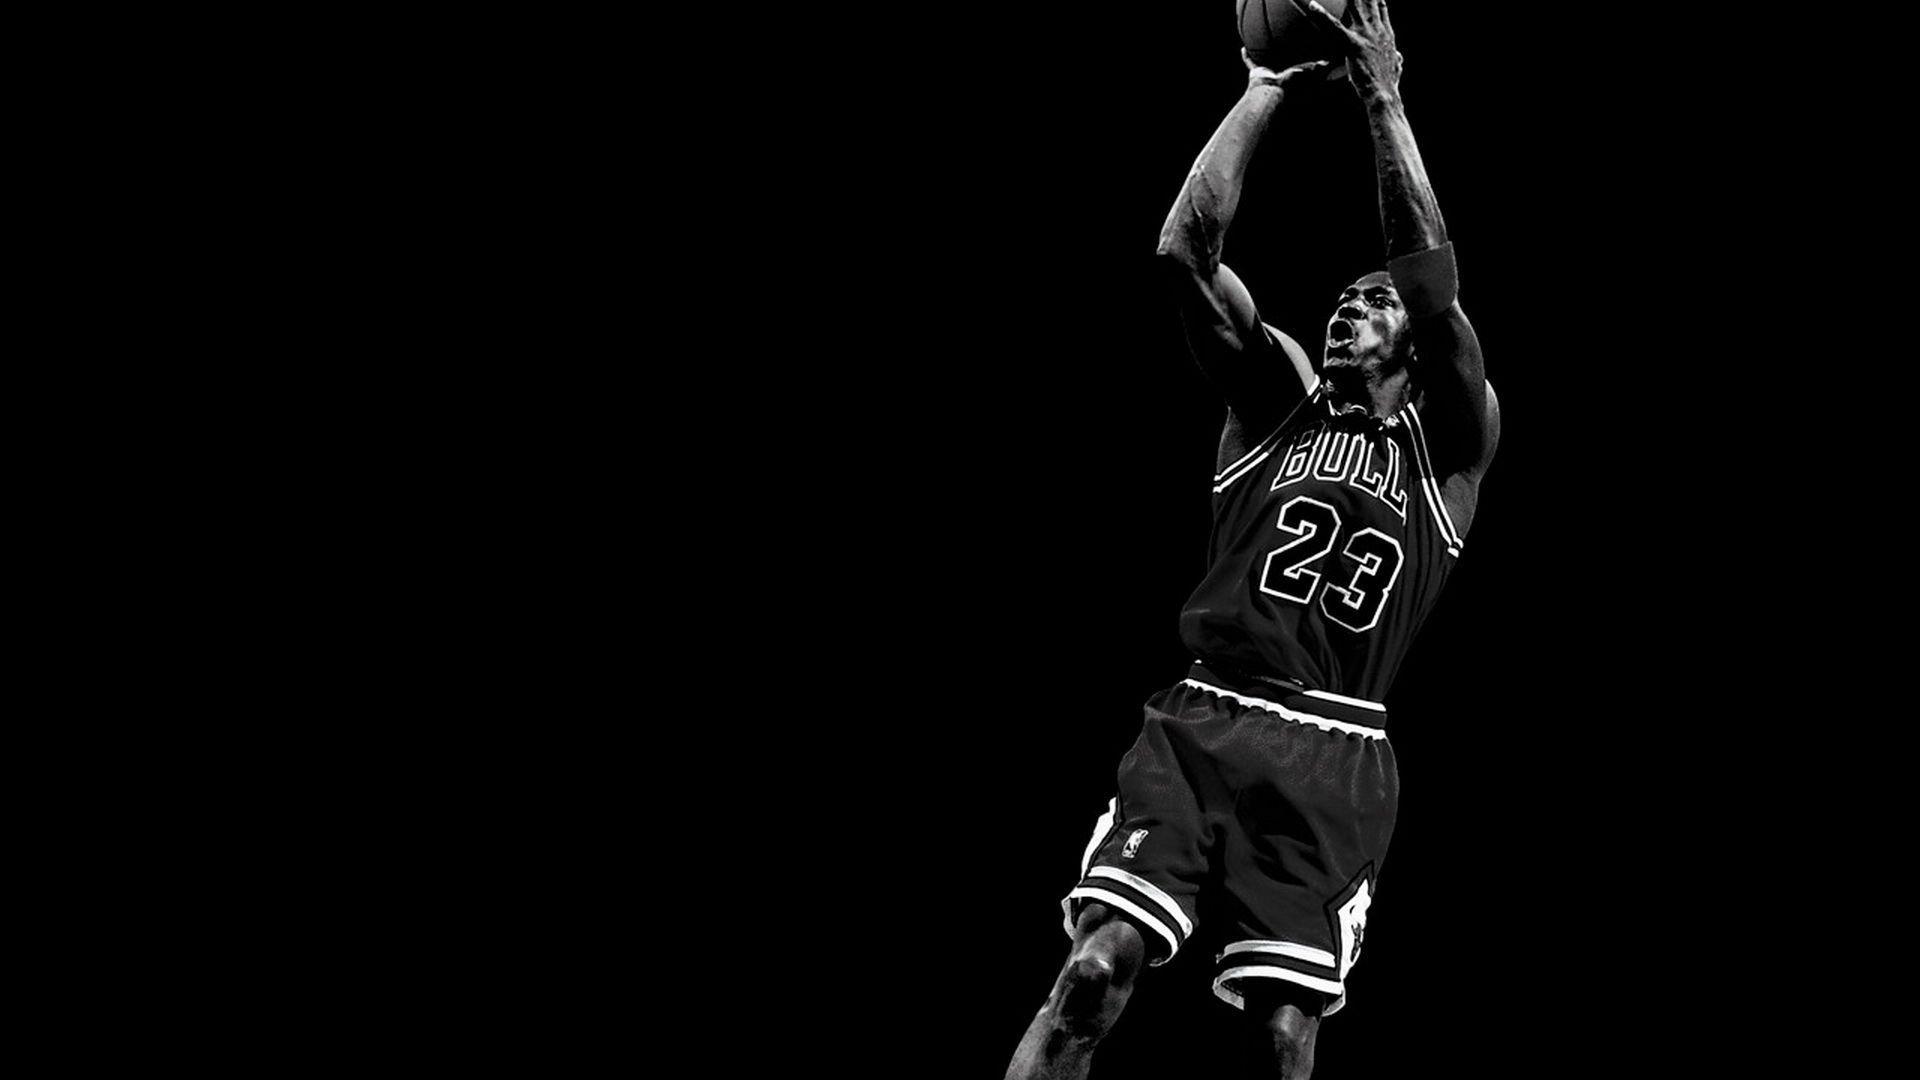 Michael Jordan Black And White Wallpaper #JOe